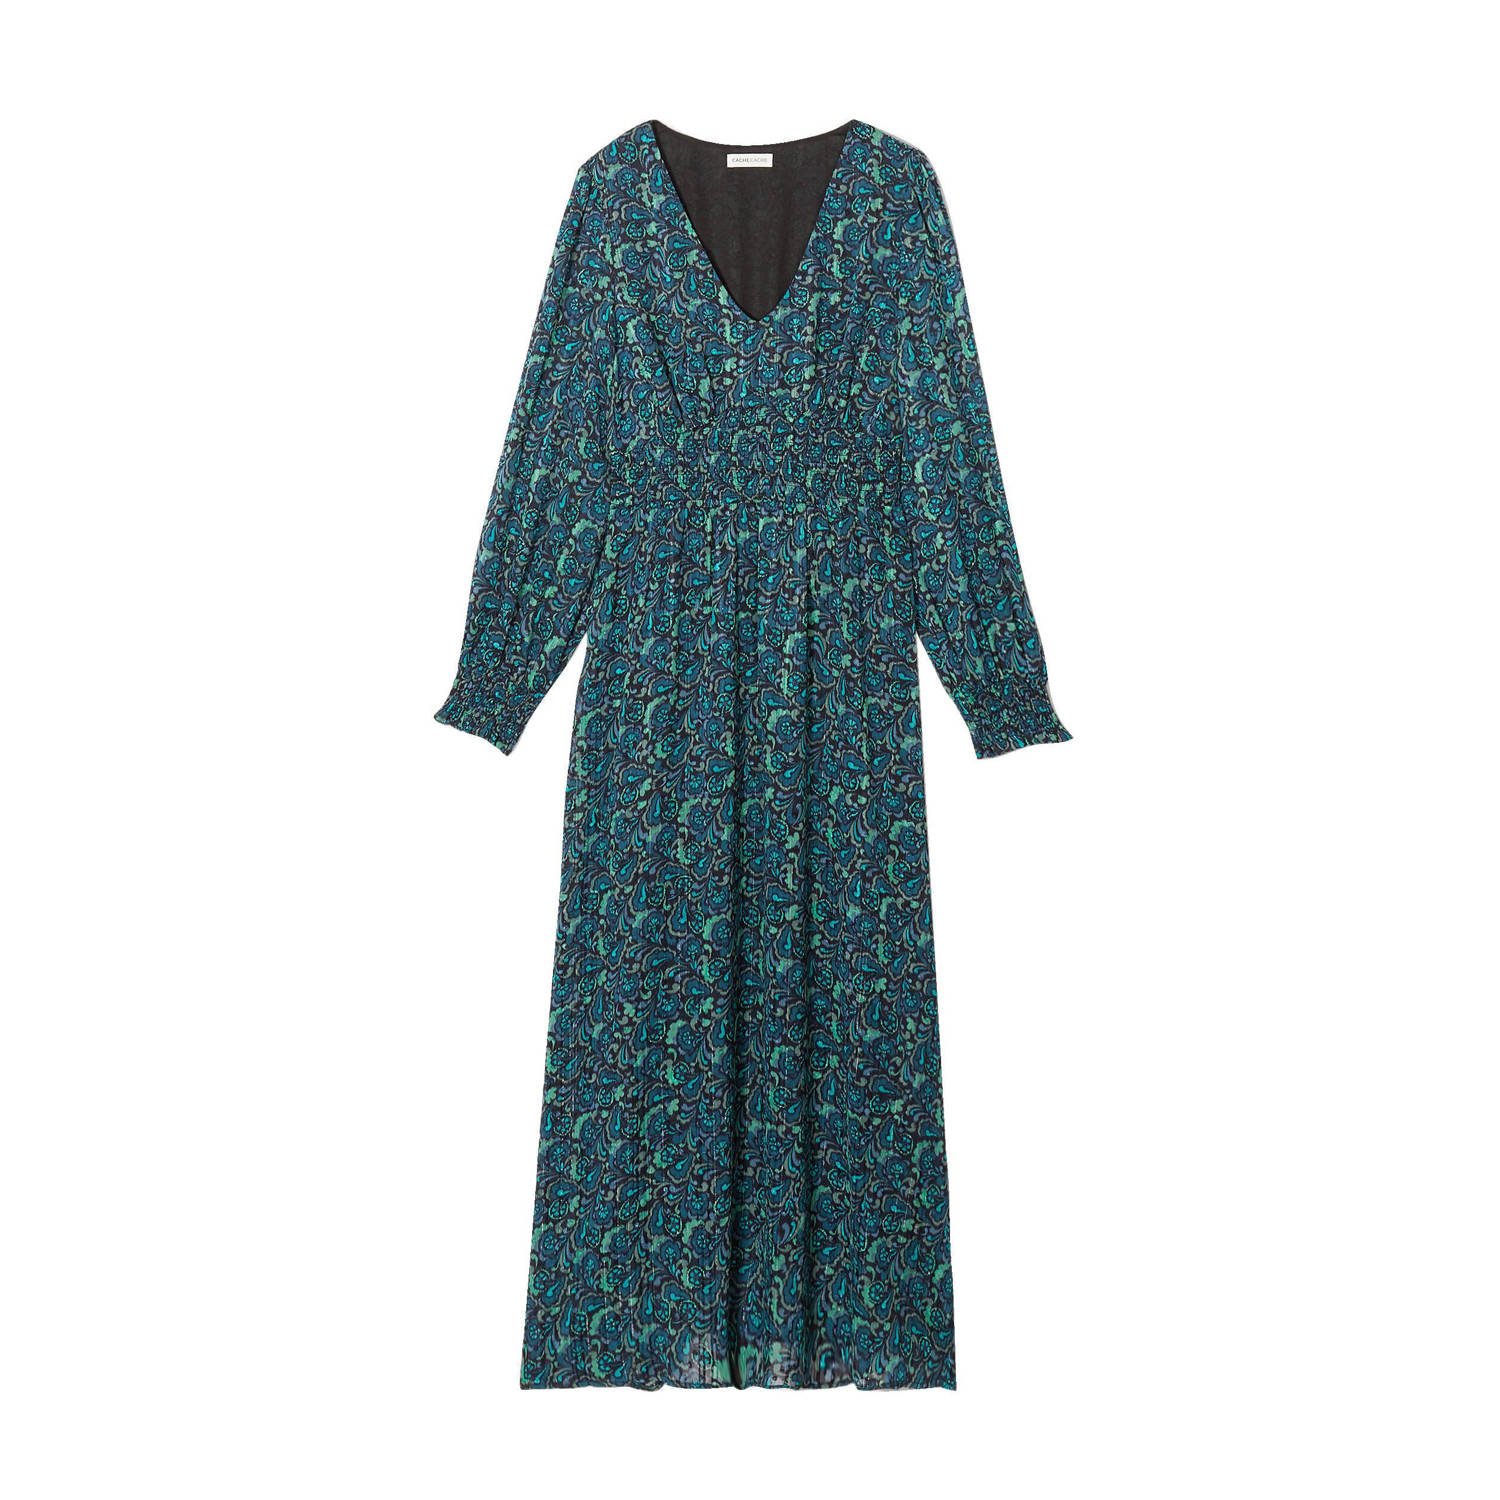 Cache semi-transparante jurk met all over print en glitters marine turquoise